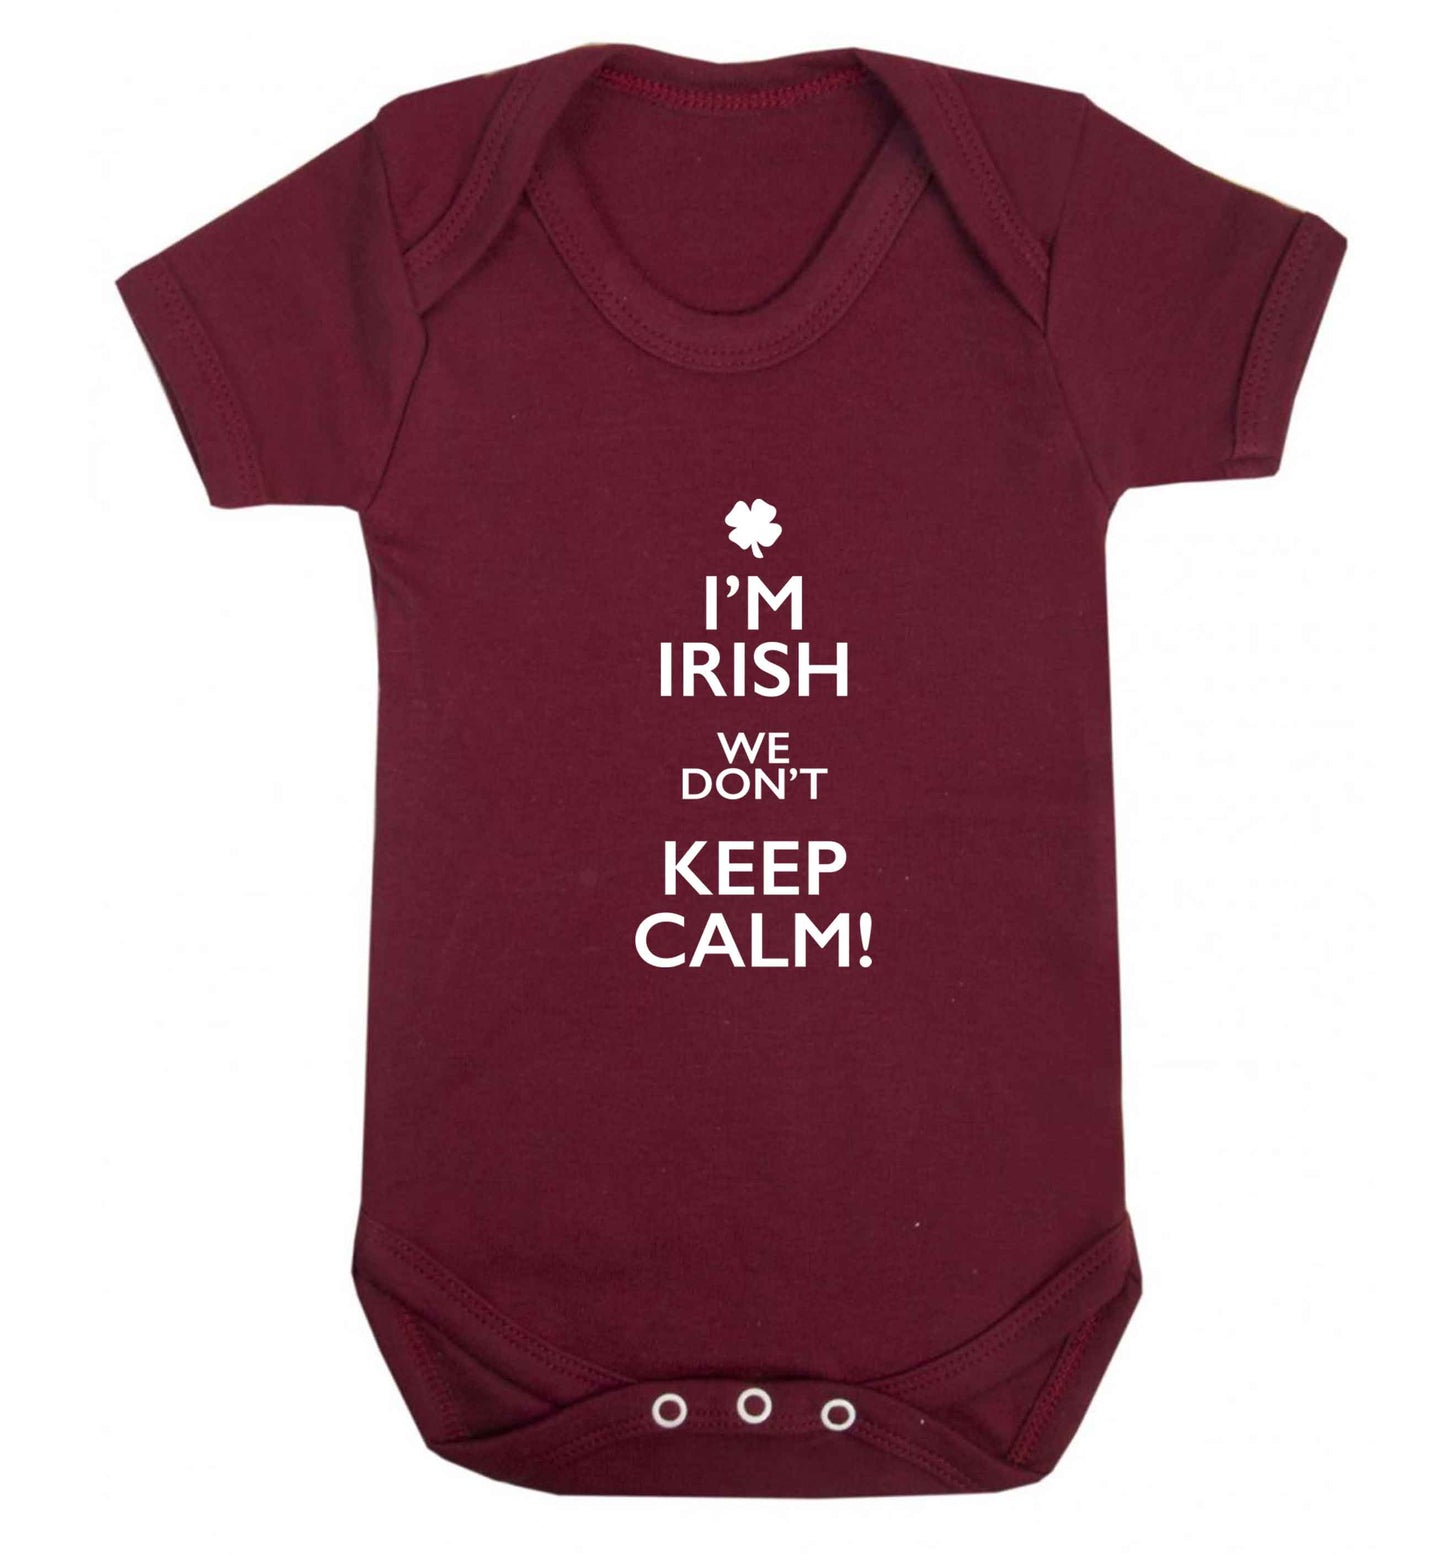 I'm Irish we don't keep calm baby vest maroon 18-24 months